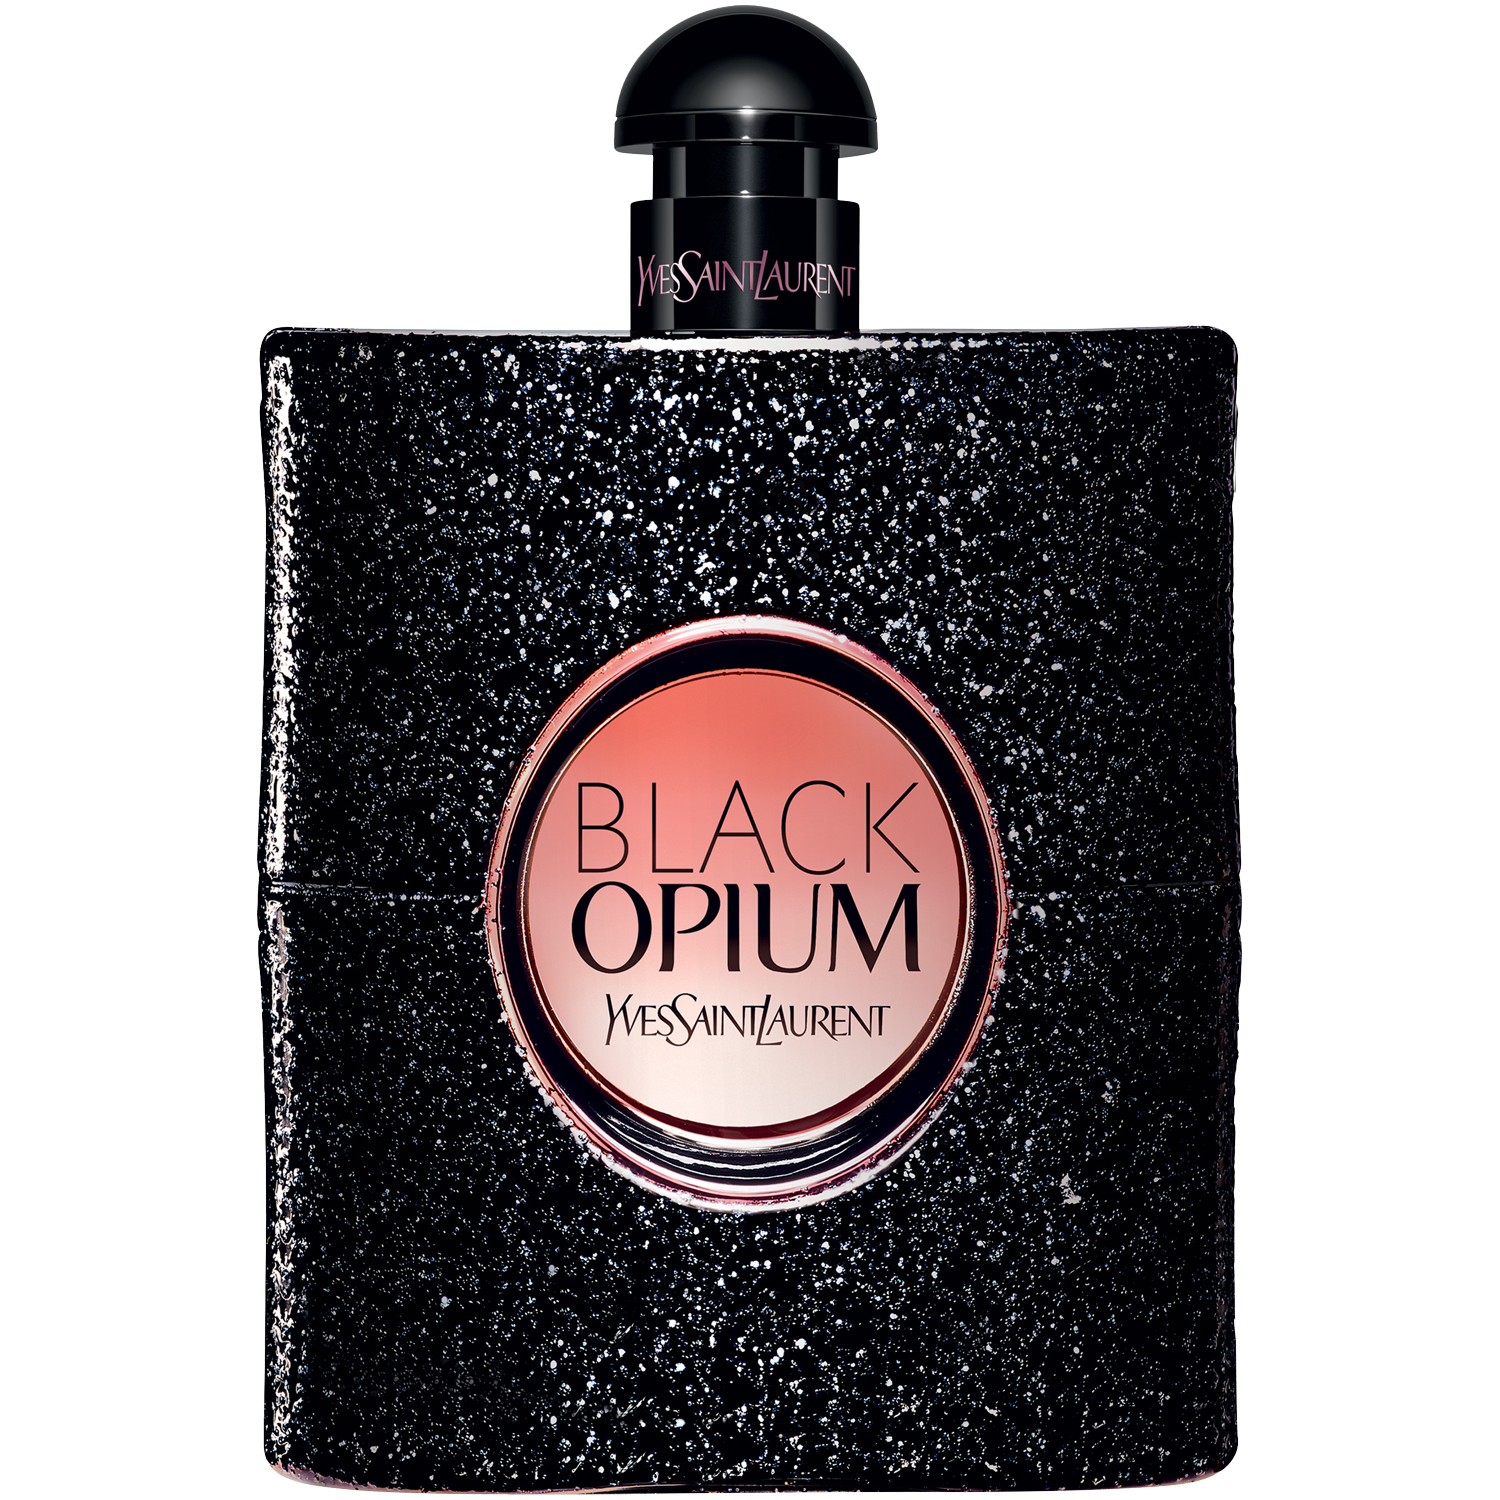 Женская парфюмерная вода Yves Saint Laurent Black Opium, 30 мл перец восточный базар семена